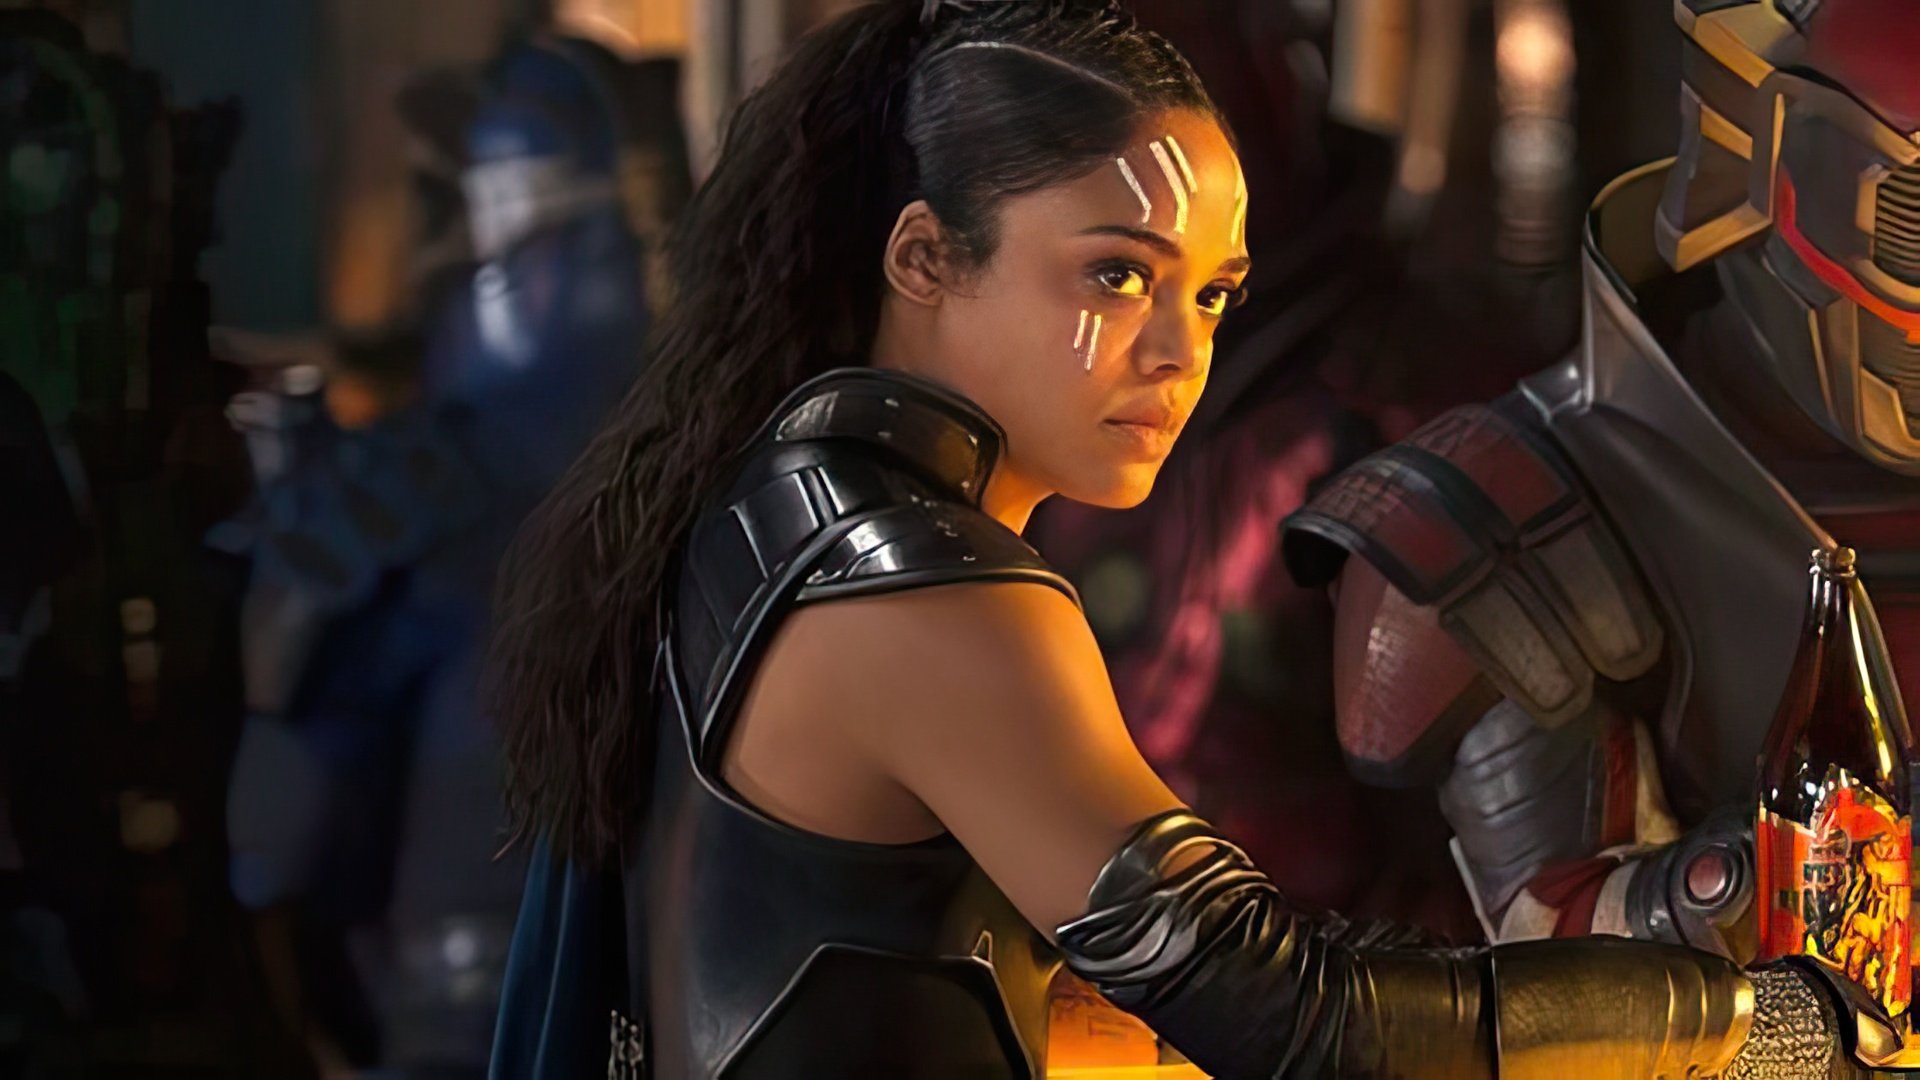 Tessa Thompson starred as Valkyrie in the movie Thor: Ragnarok